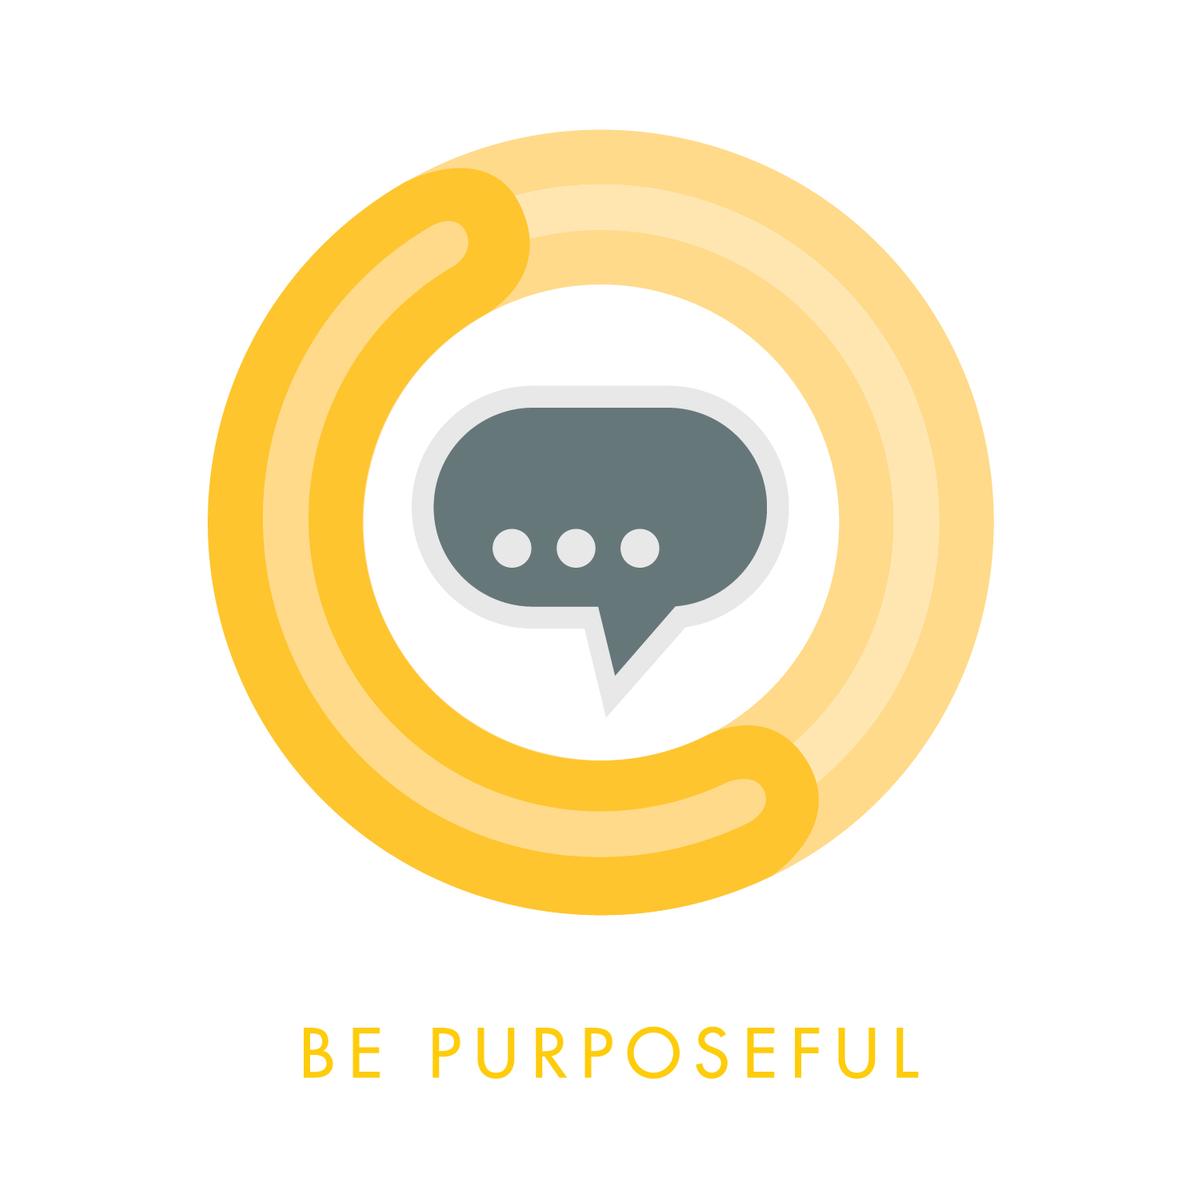 Be purposeful